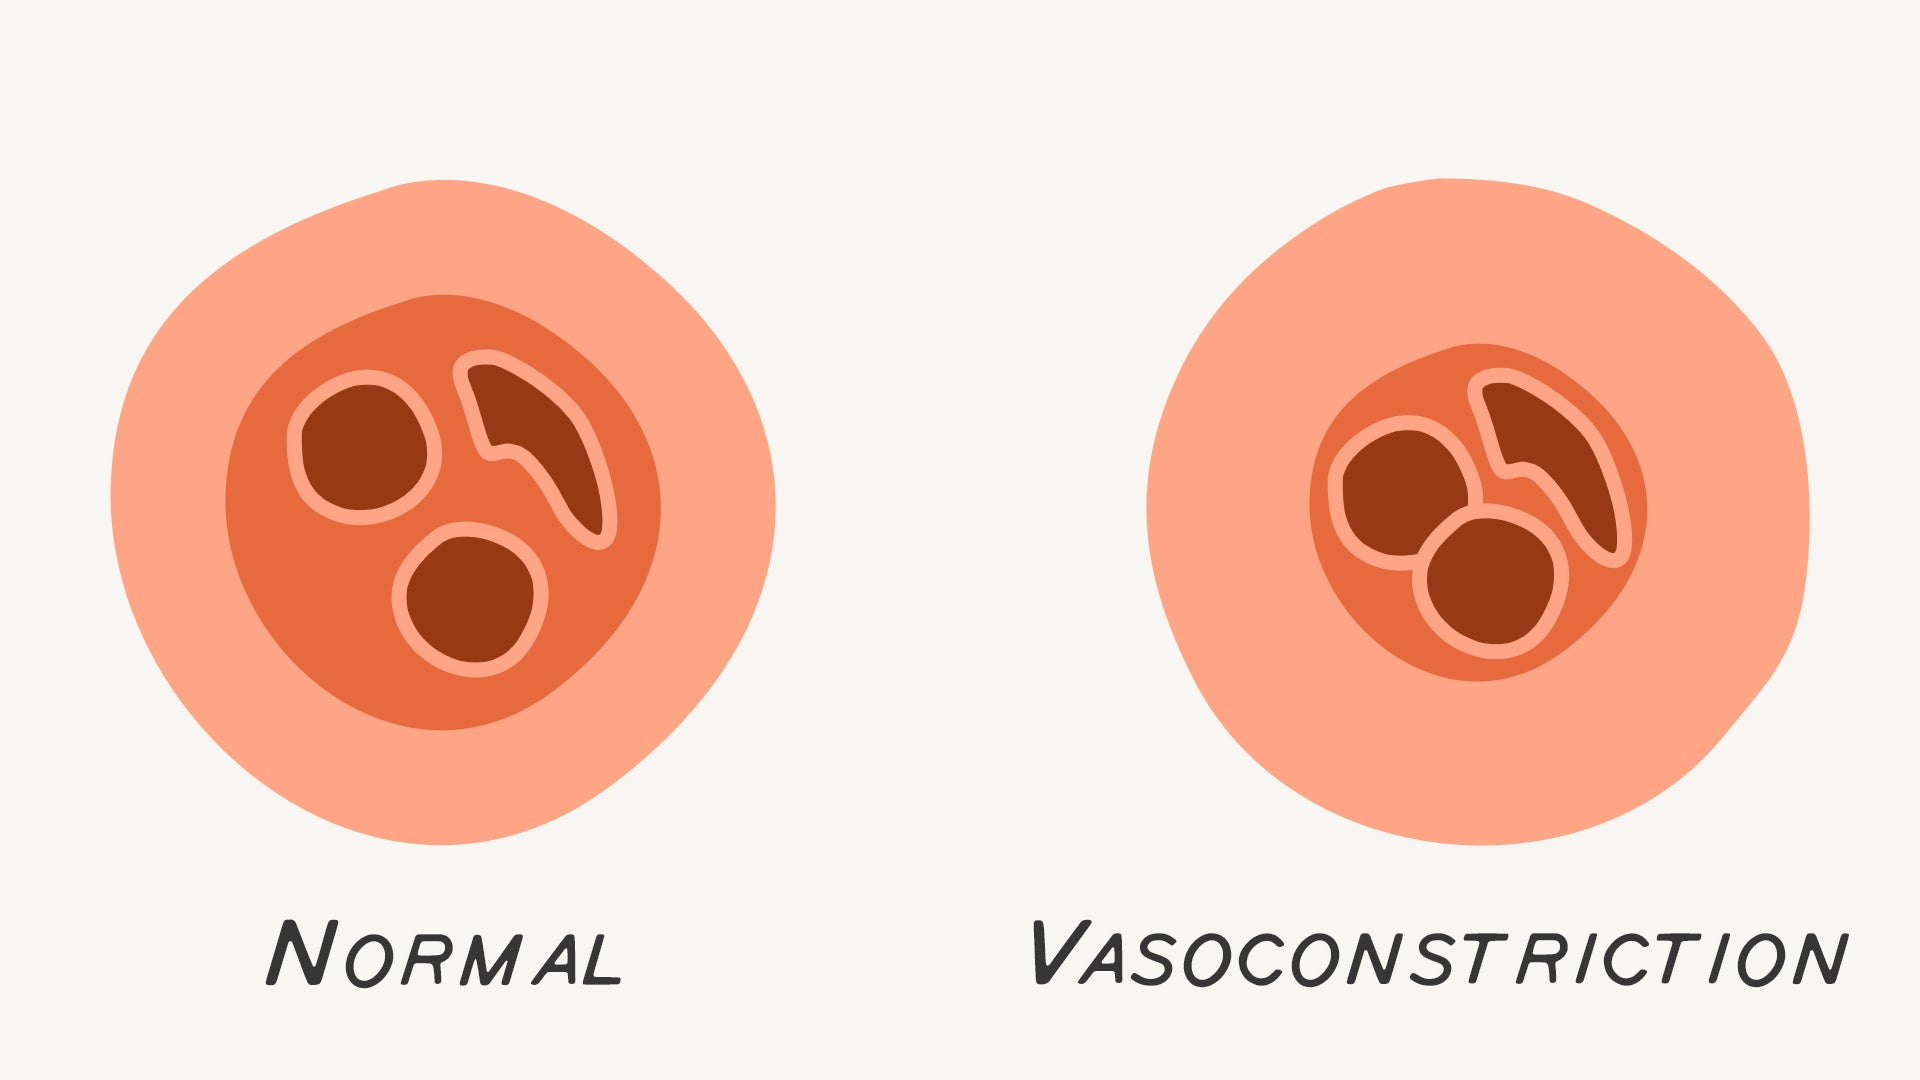 Vasoconstriction